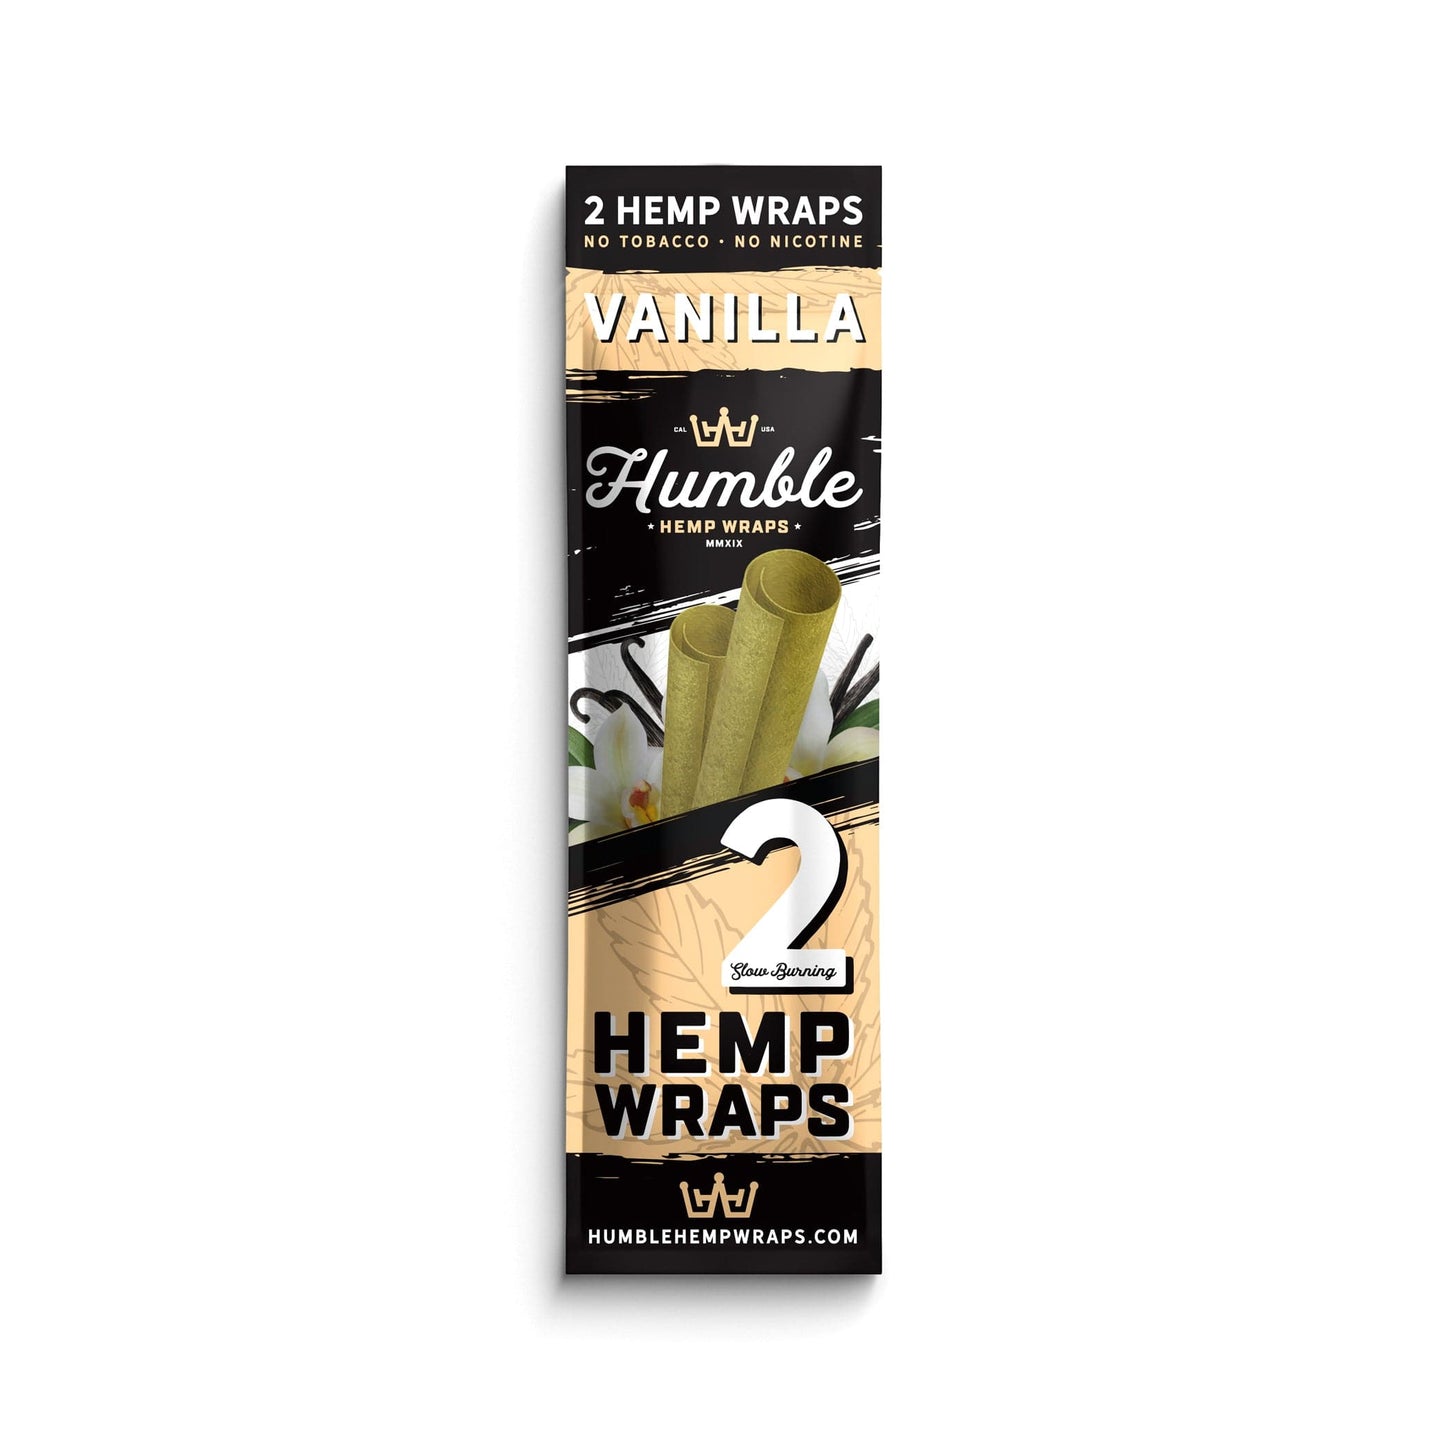 Humble Hemp Wraps - Vanilla - 25 Pack